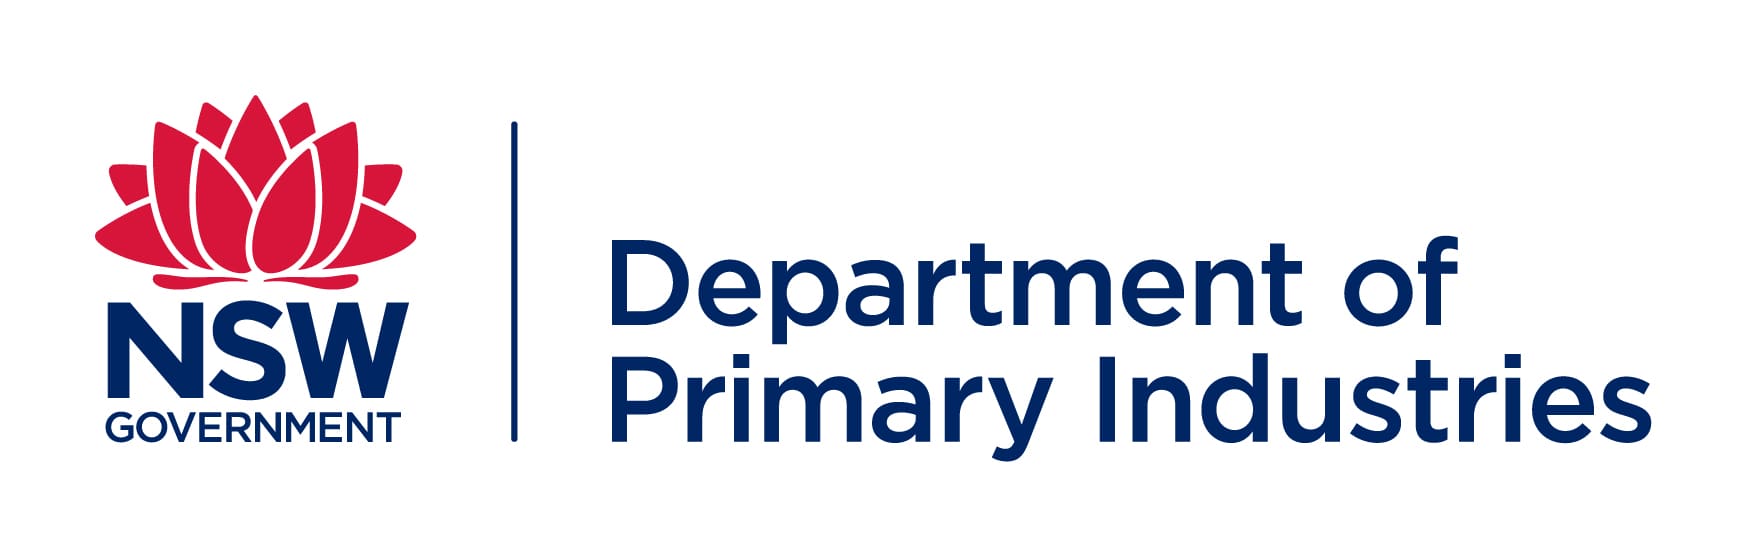 department of primary industries logo